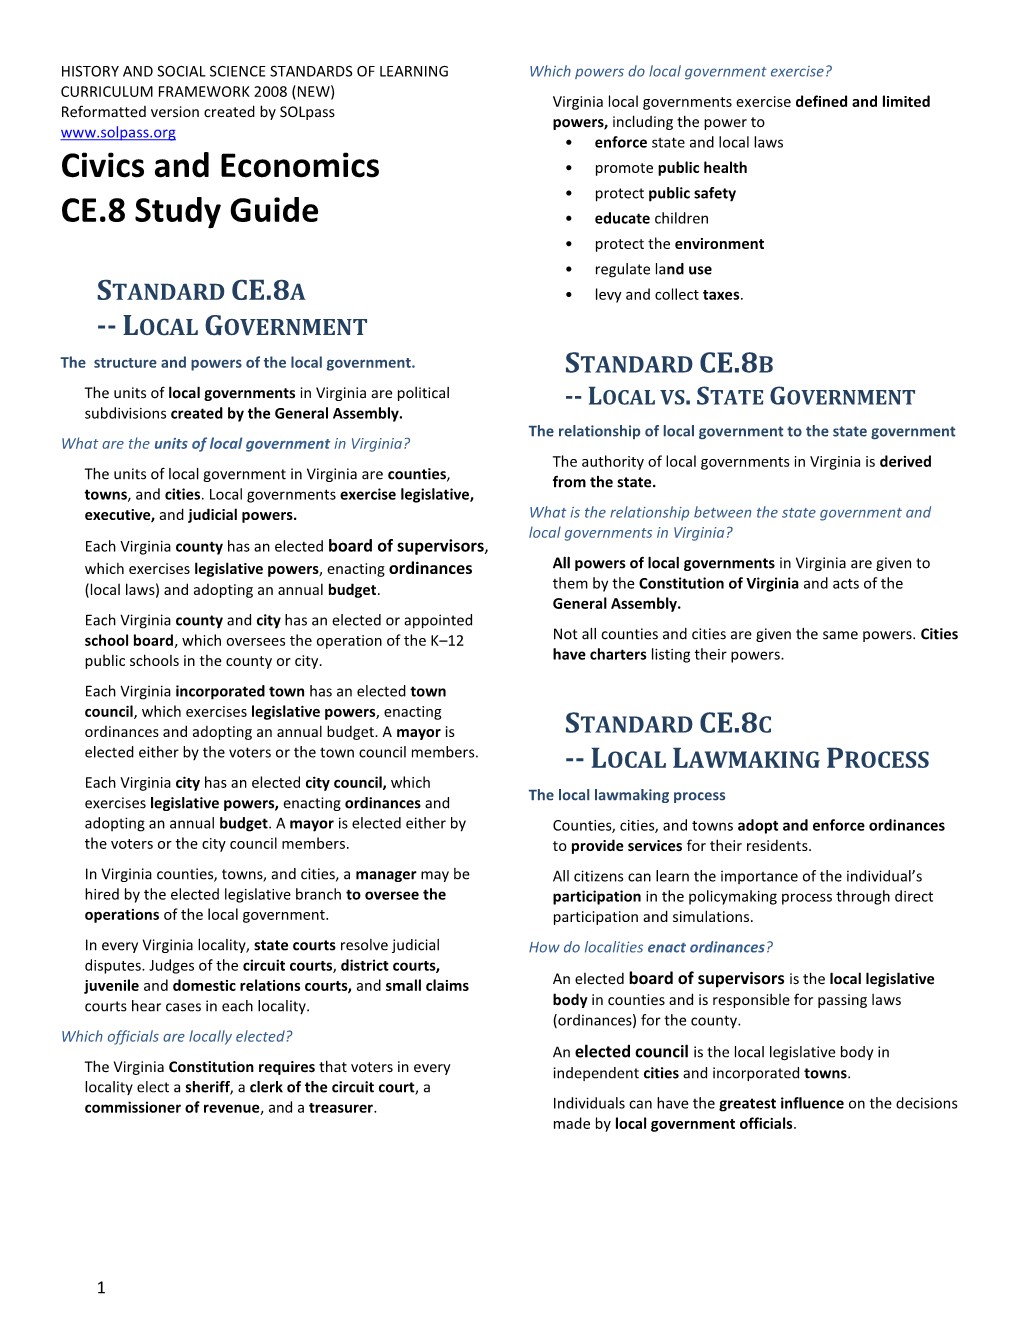 Civics and Economics CE.8 Study Guide